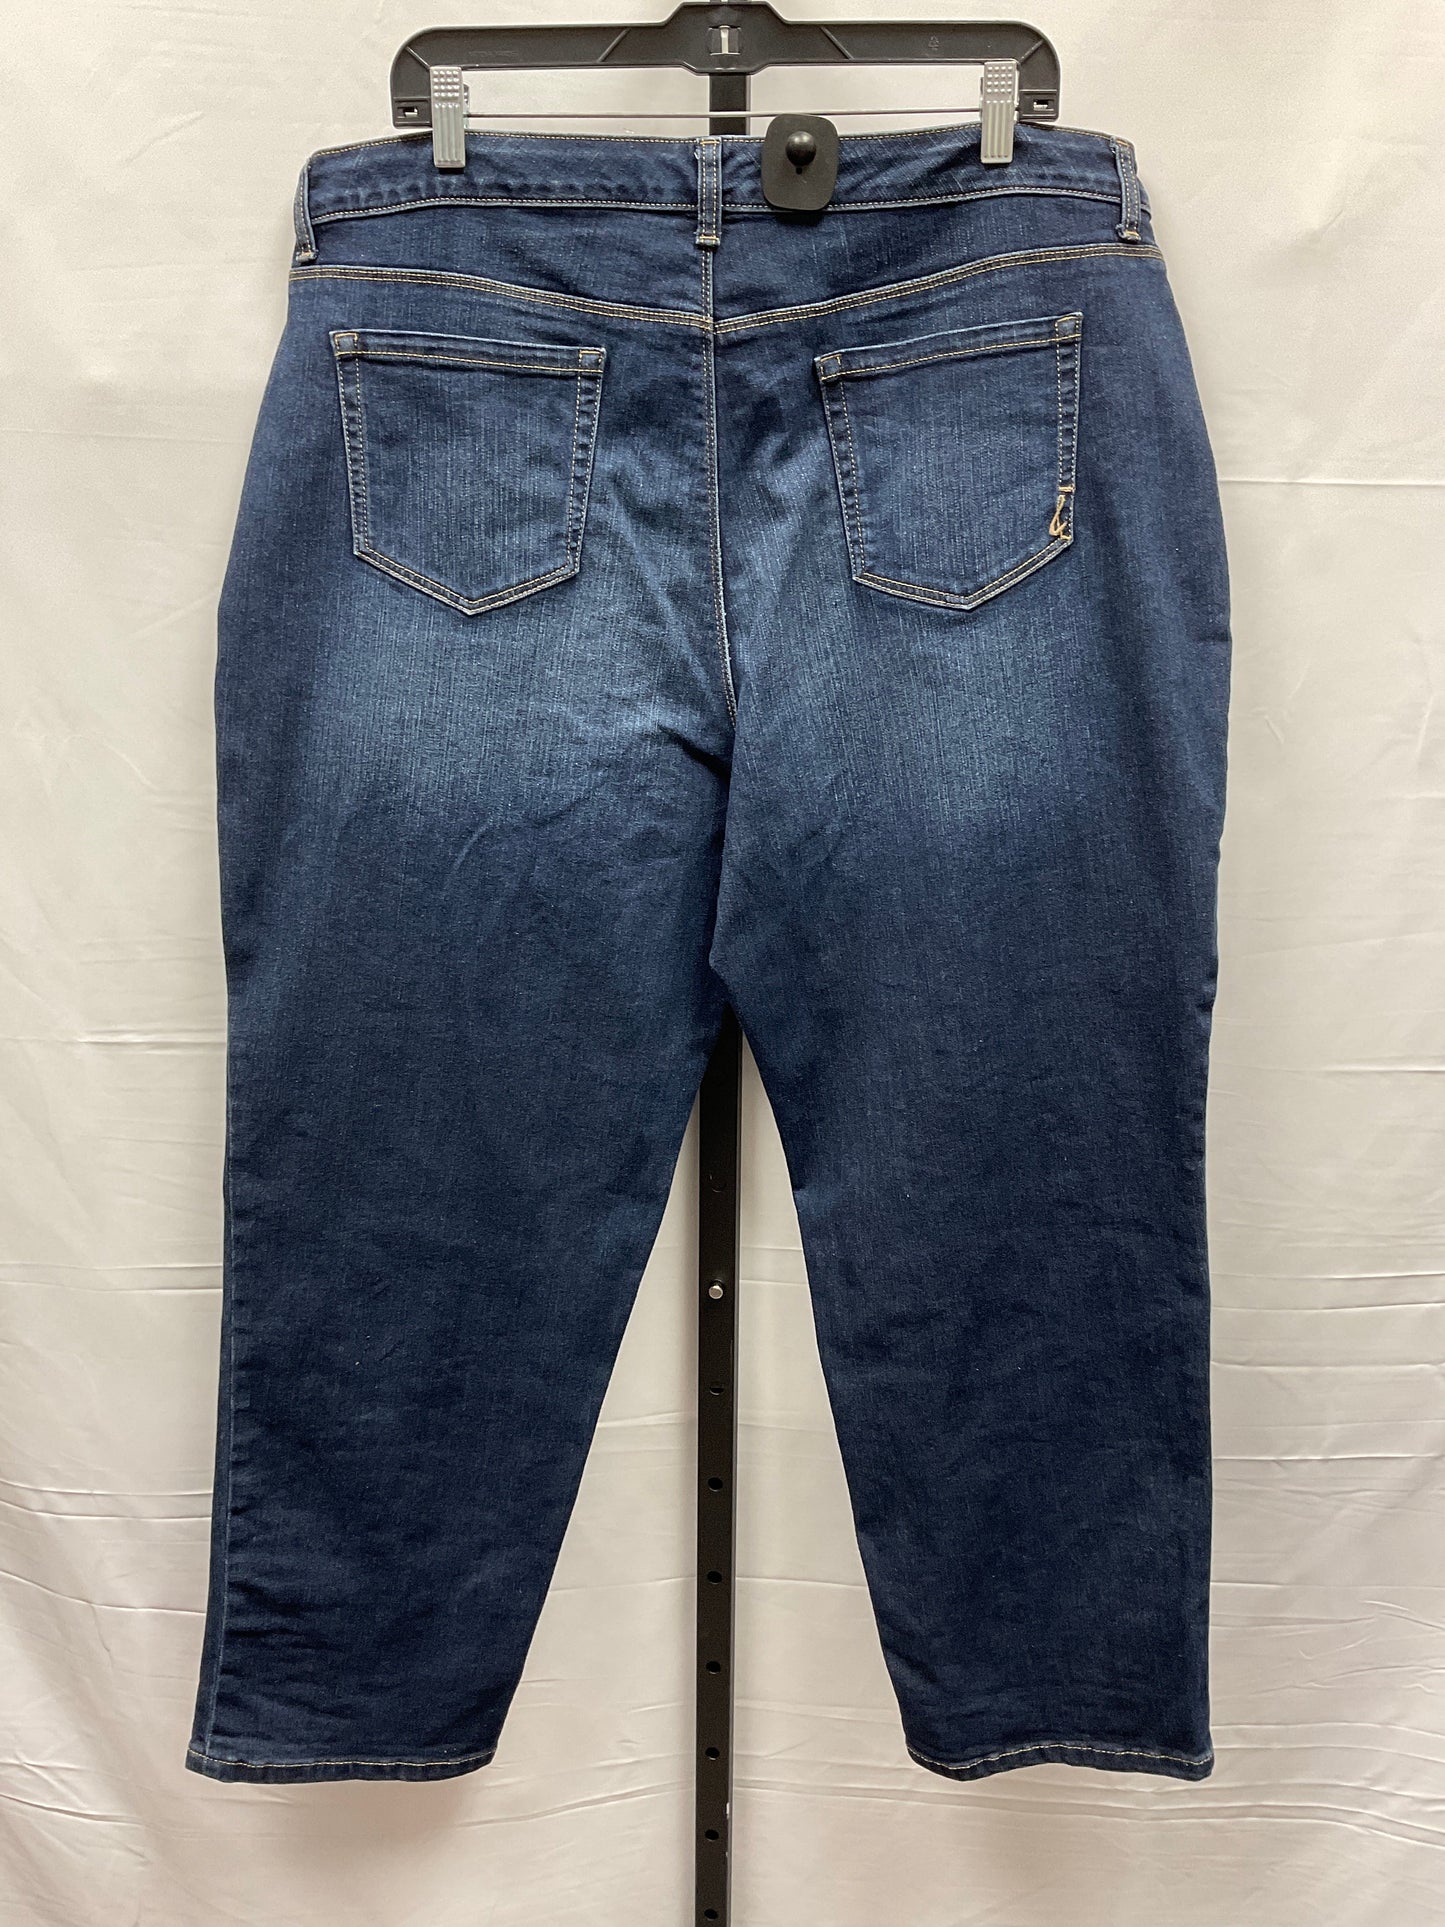 Blue Denim Jeans Boyfriend Style And Company, Size 18